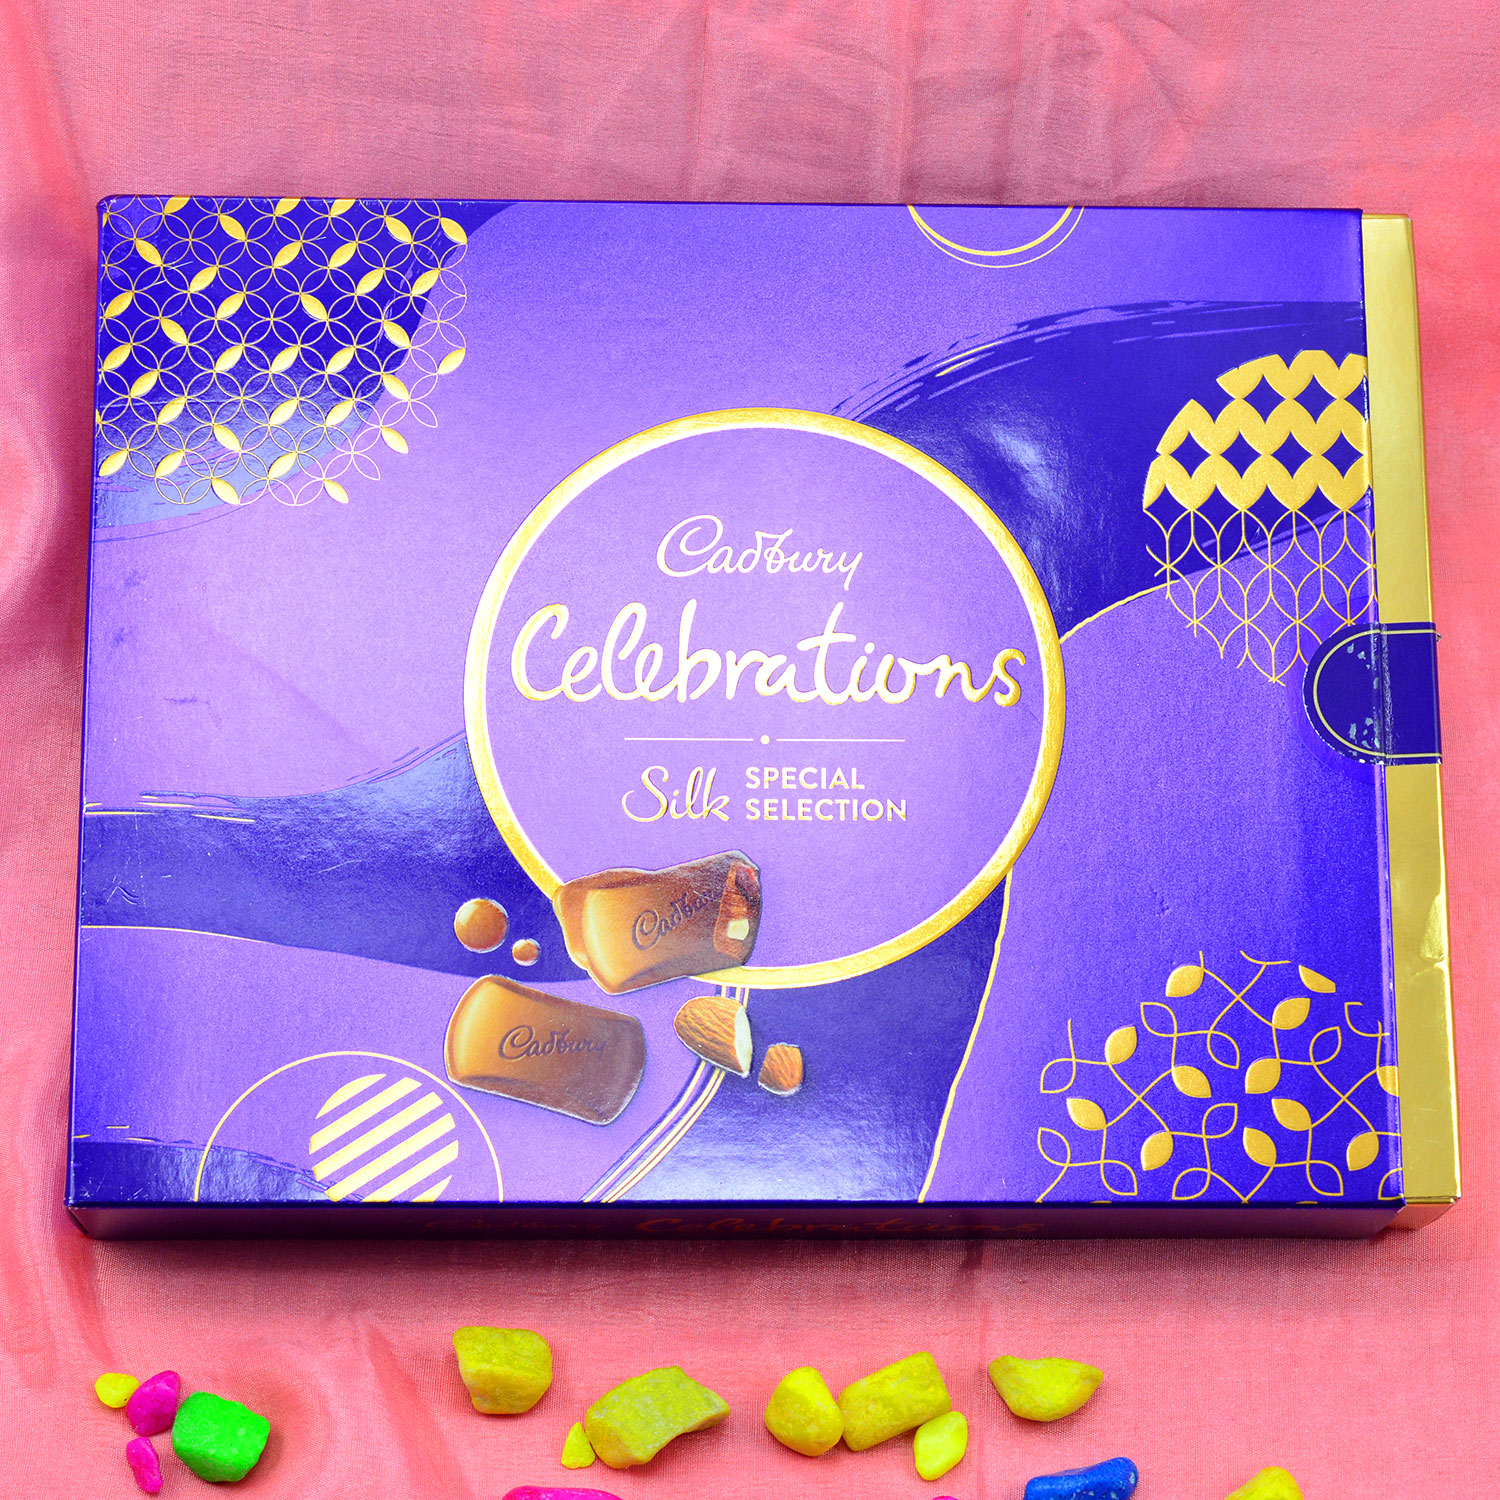 New Silk Special Selection Cadbury Celebration Chocolate Pack